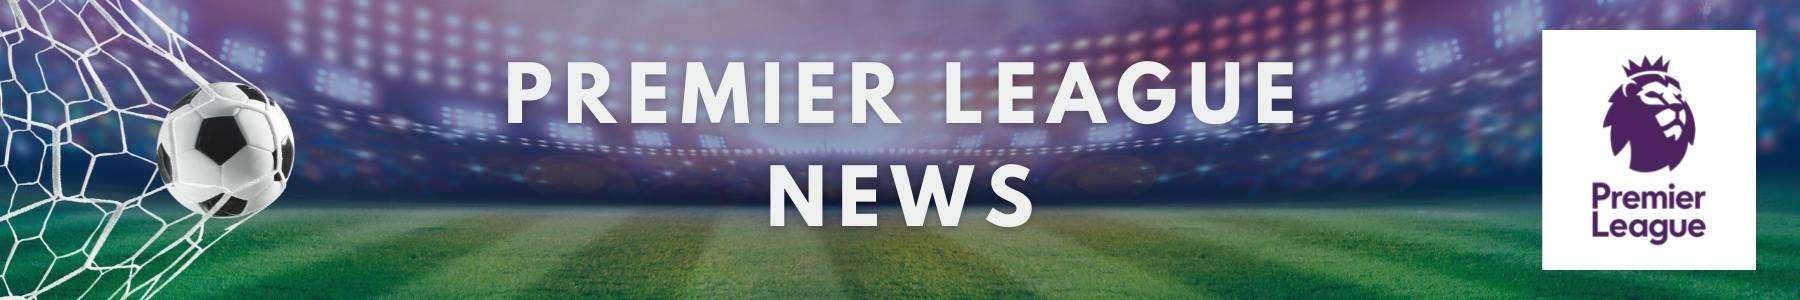 Premier League News - Football